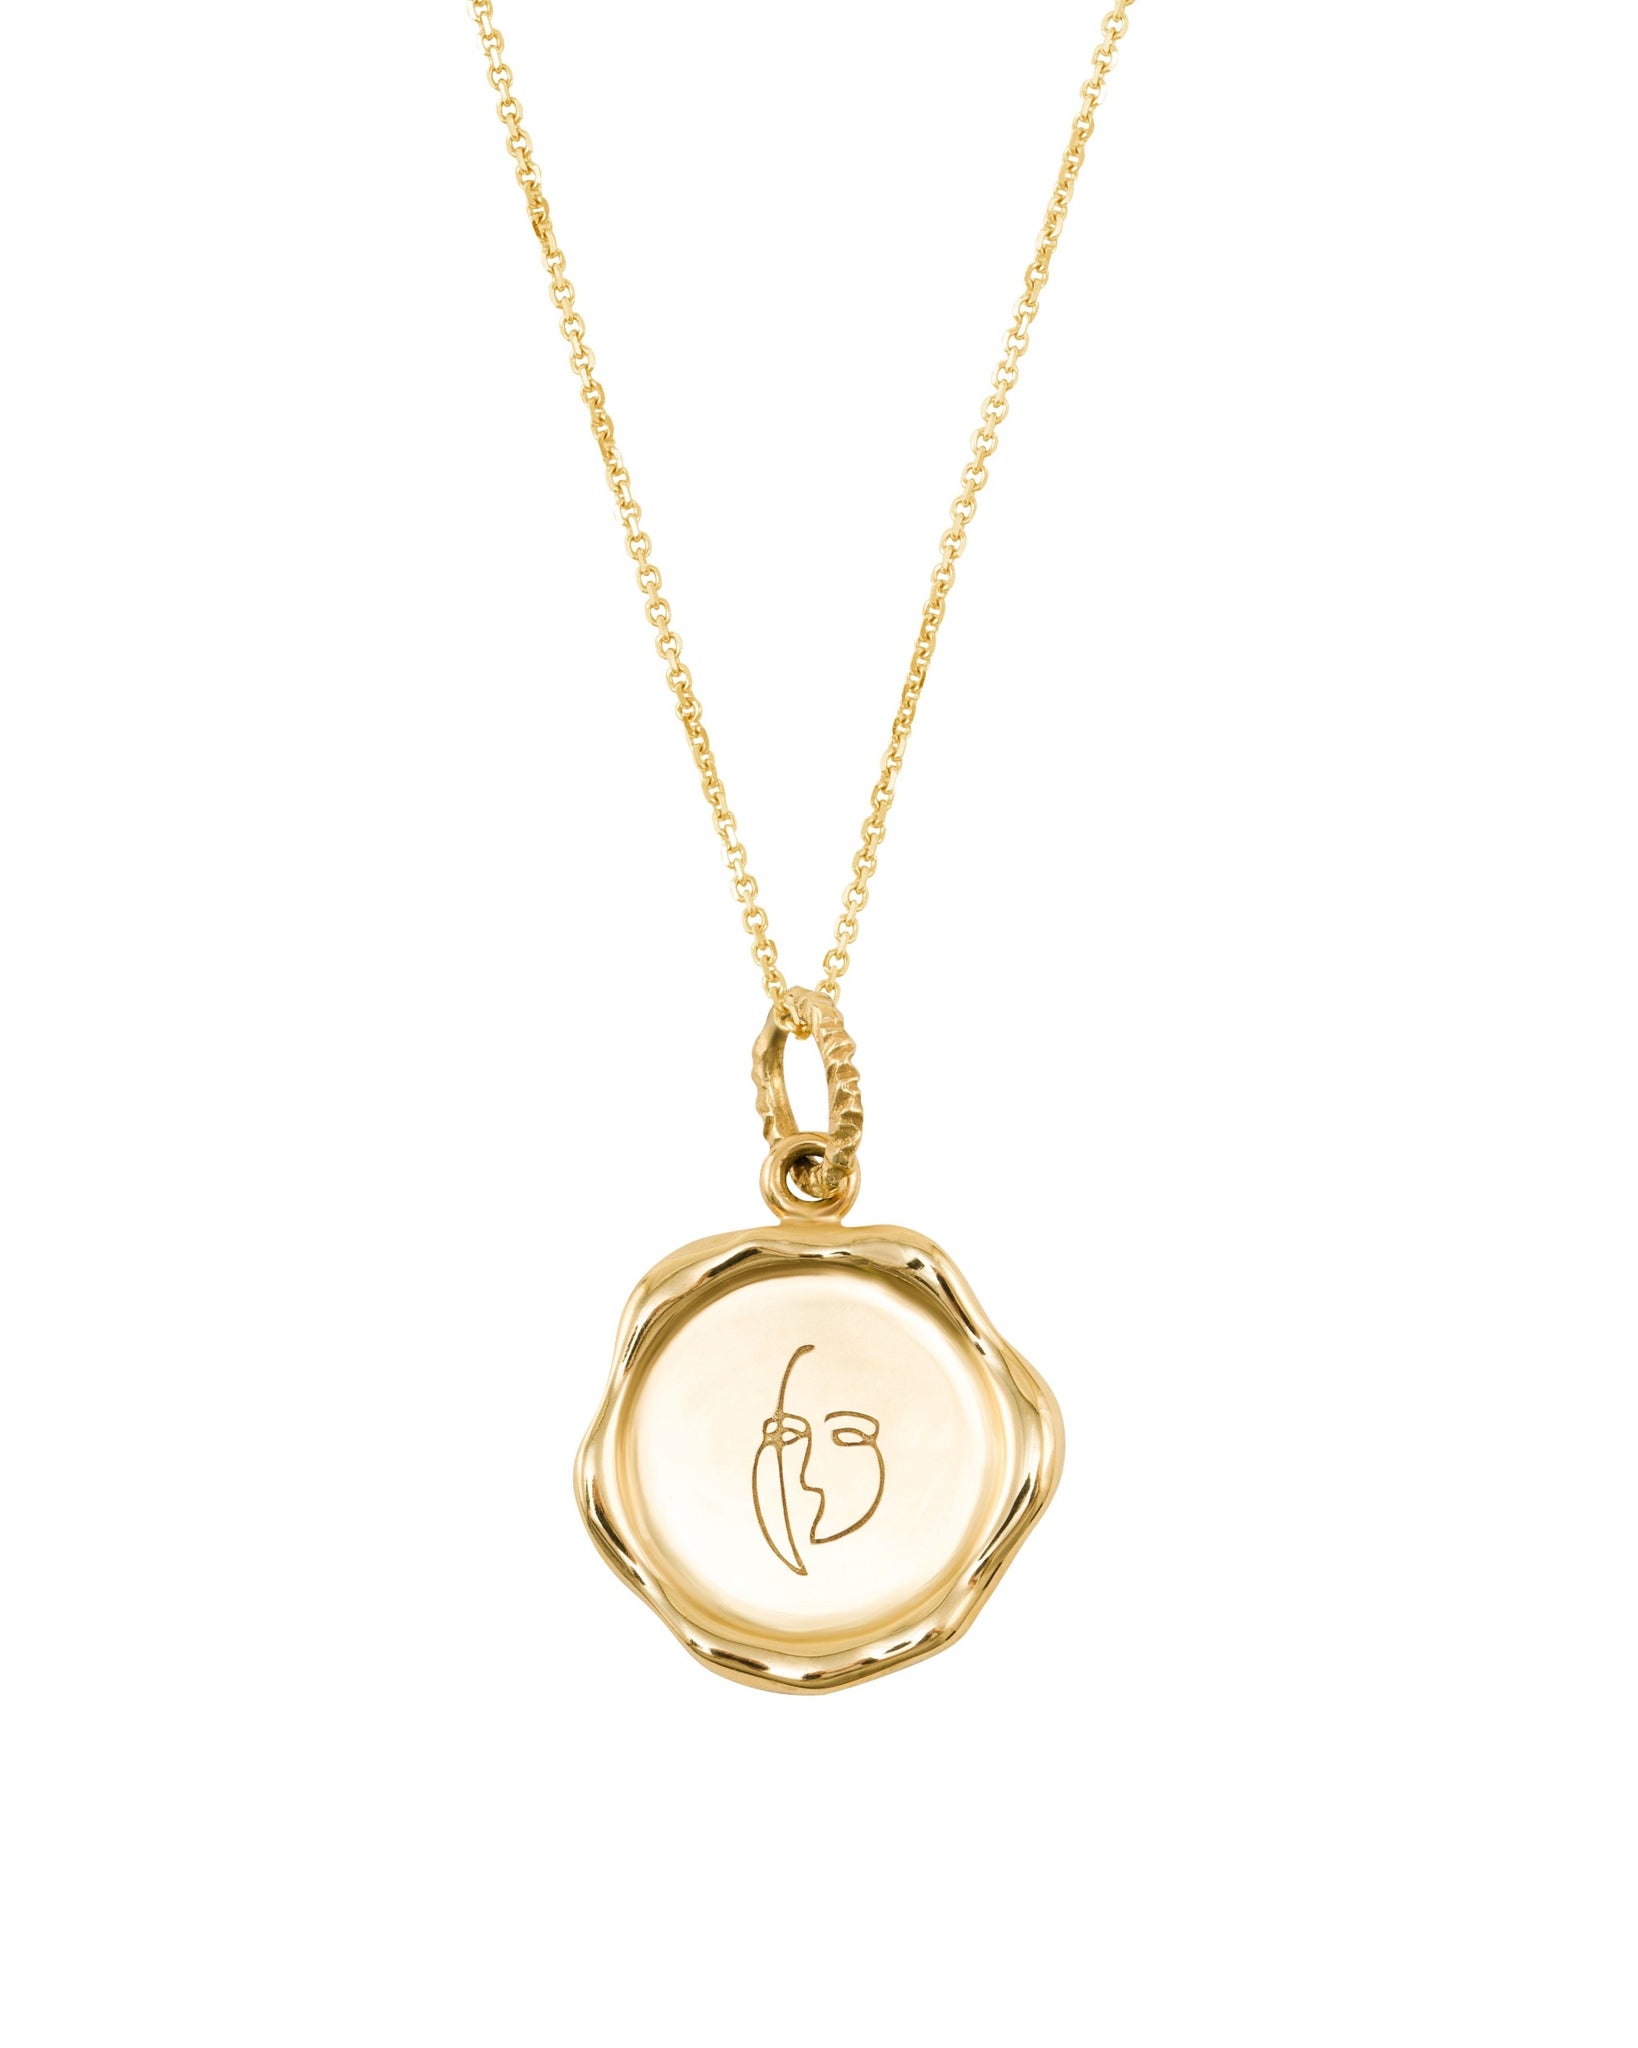 Zodiac Virgo necklace